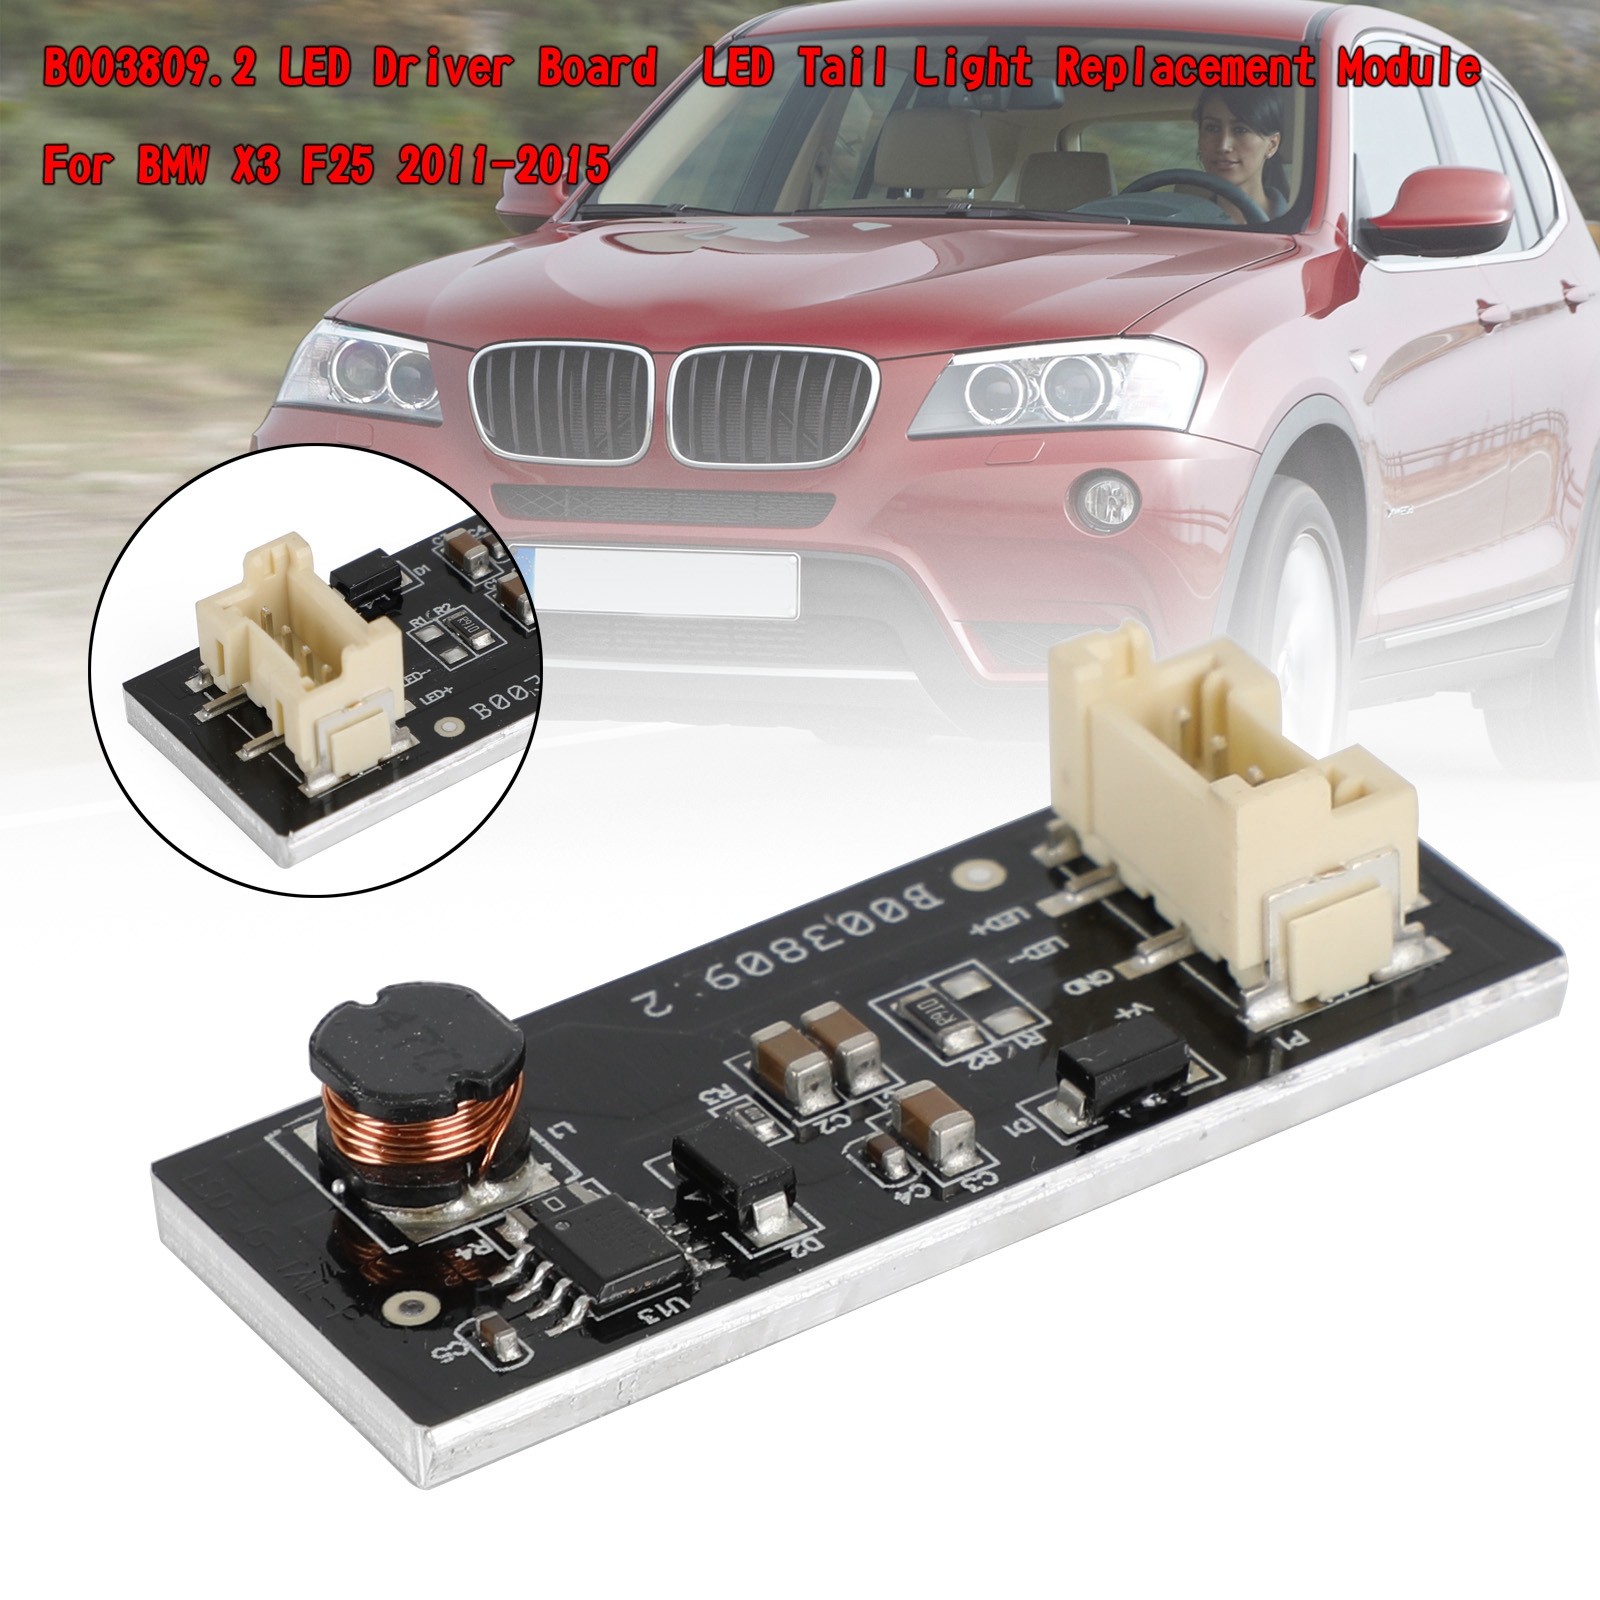 BMW X3 F25 2011-2015 B003809.2 尾燈LED驅動器維修更換板芯片-極限超快感